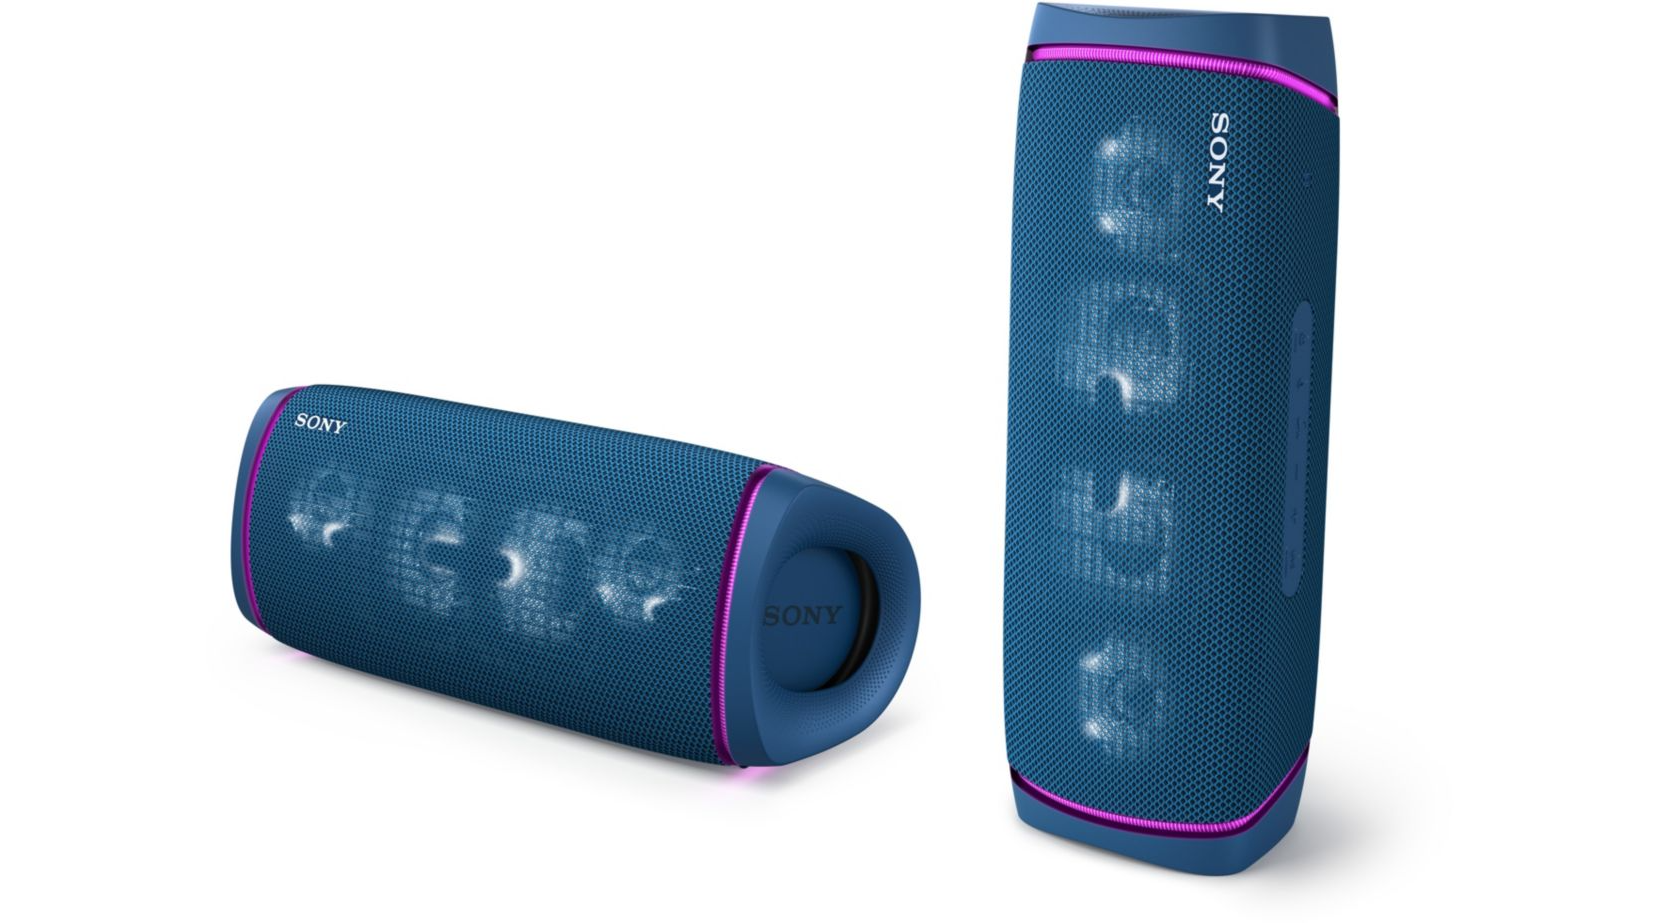 Sony - Enceinte Bluetooth SRS-XB43 Extra Bass - Bleu Lagon